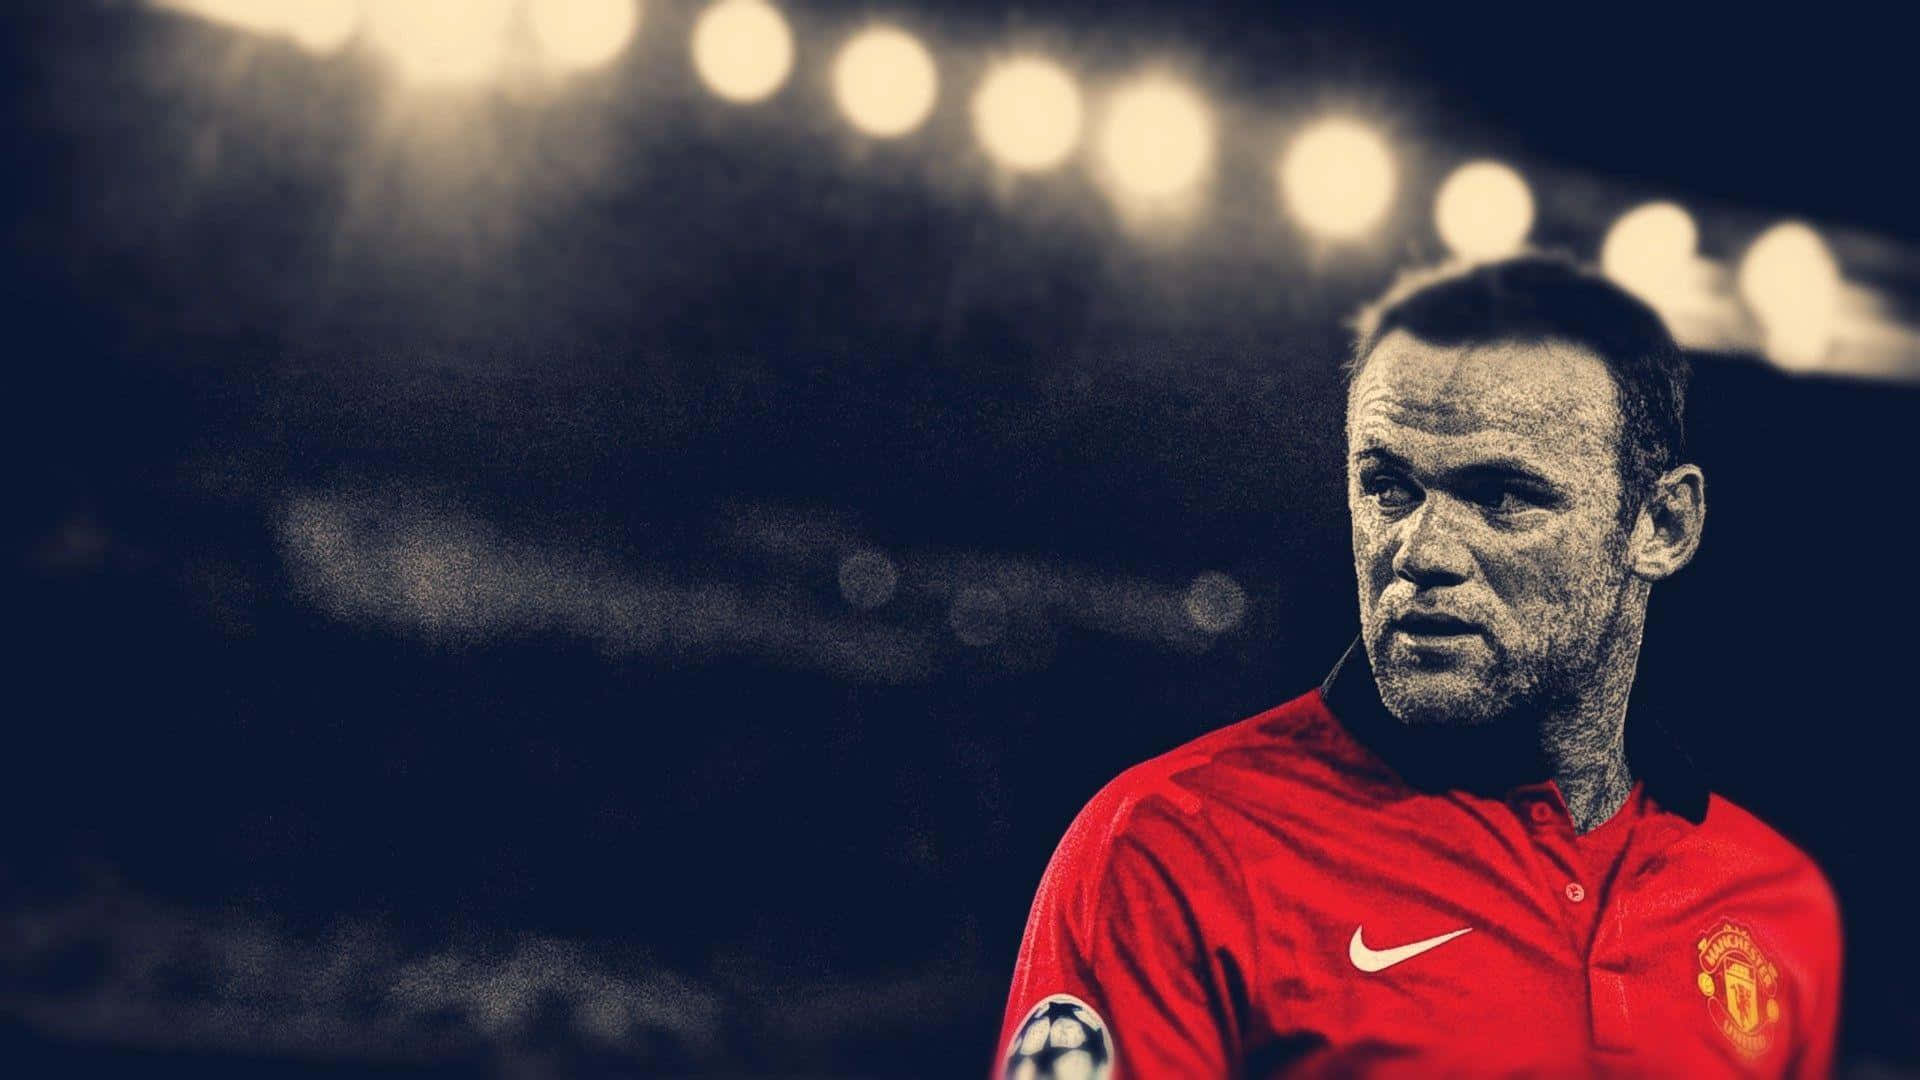 Delanterodel Manchester United, Wayne Rooney